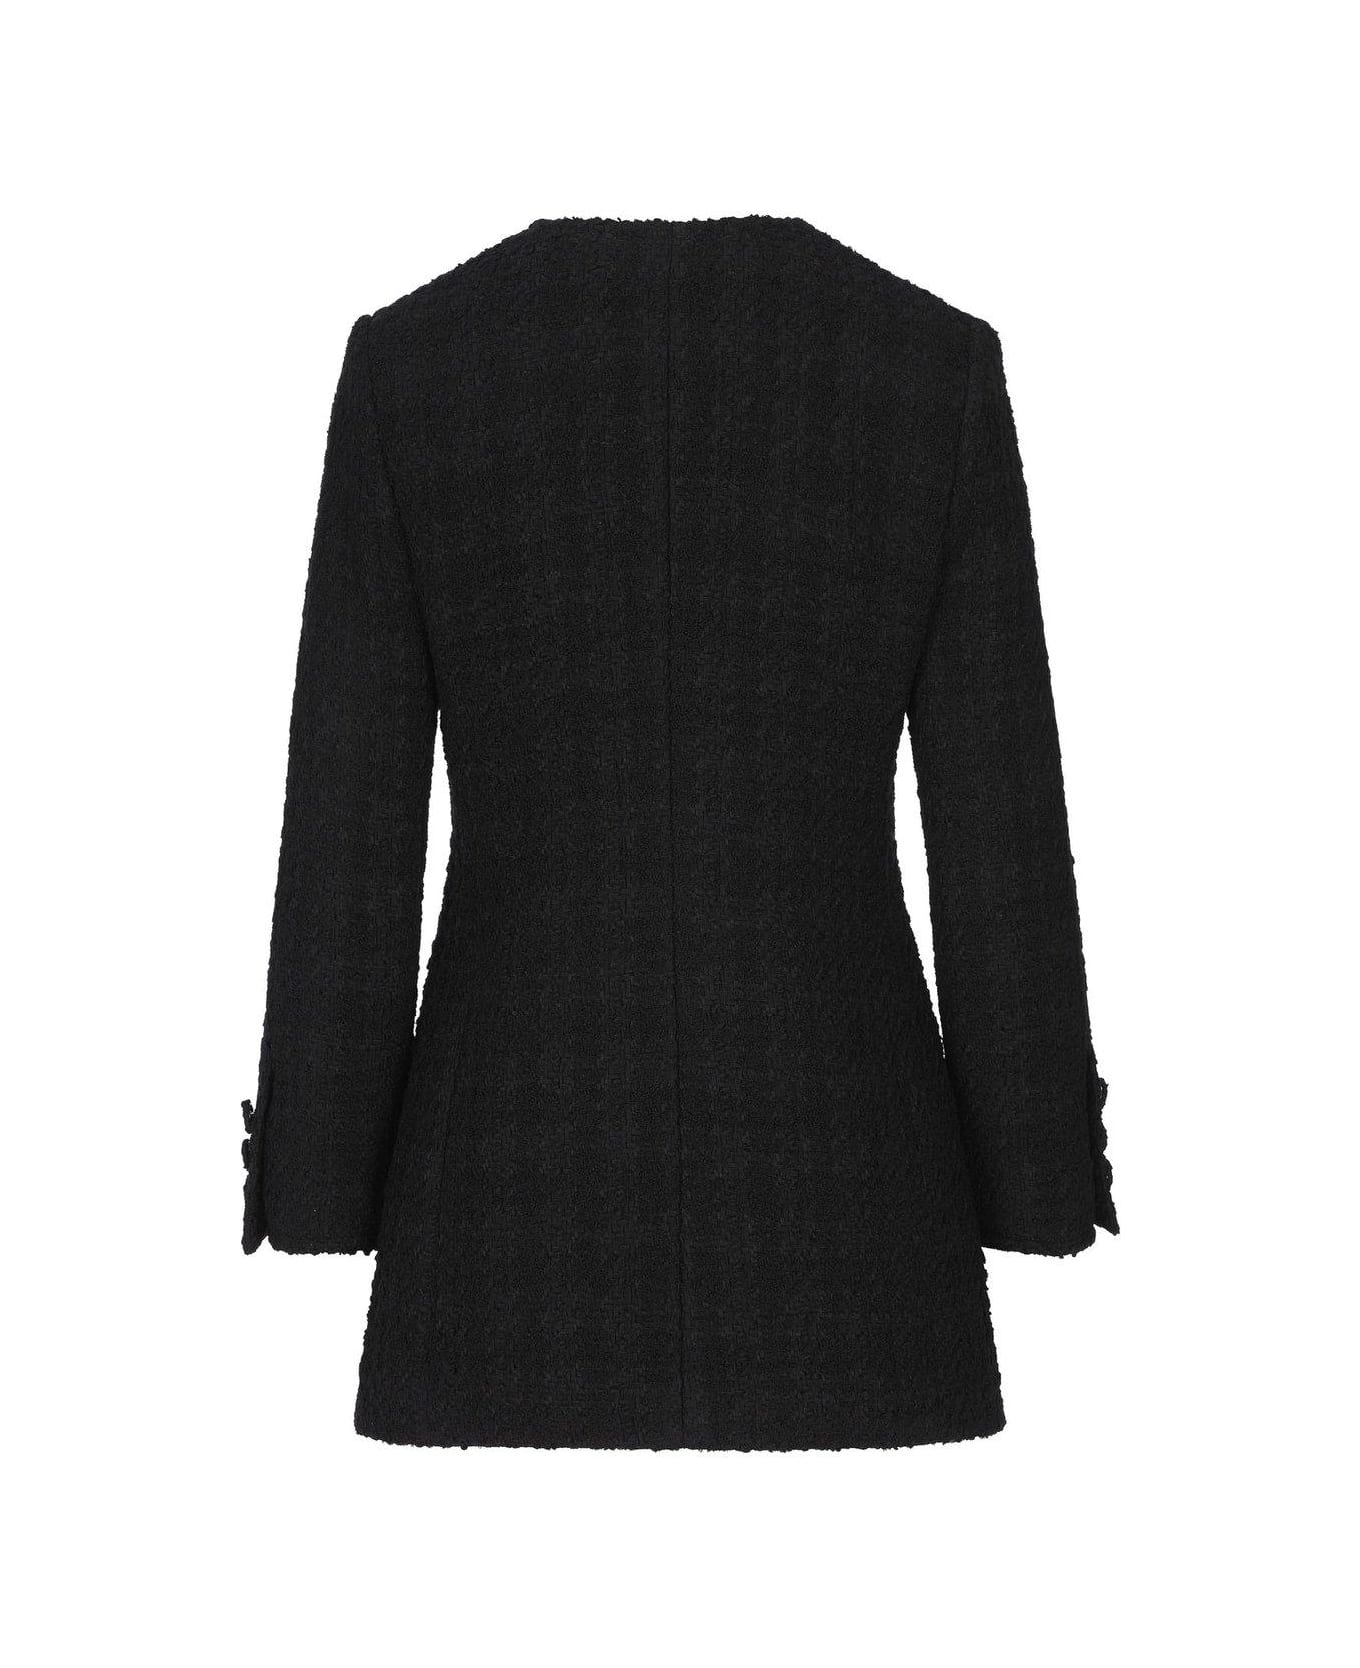 Gucci Single Breasted Tweed Jacket - Black コート